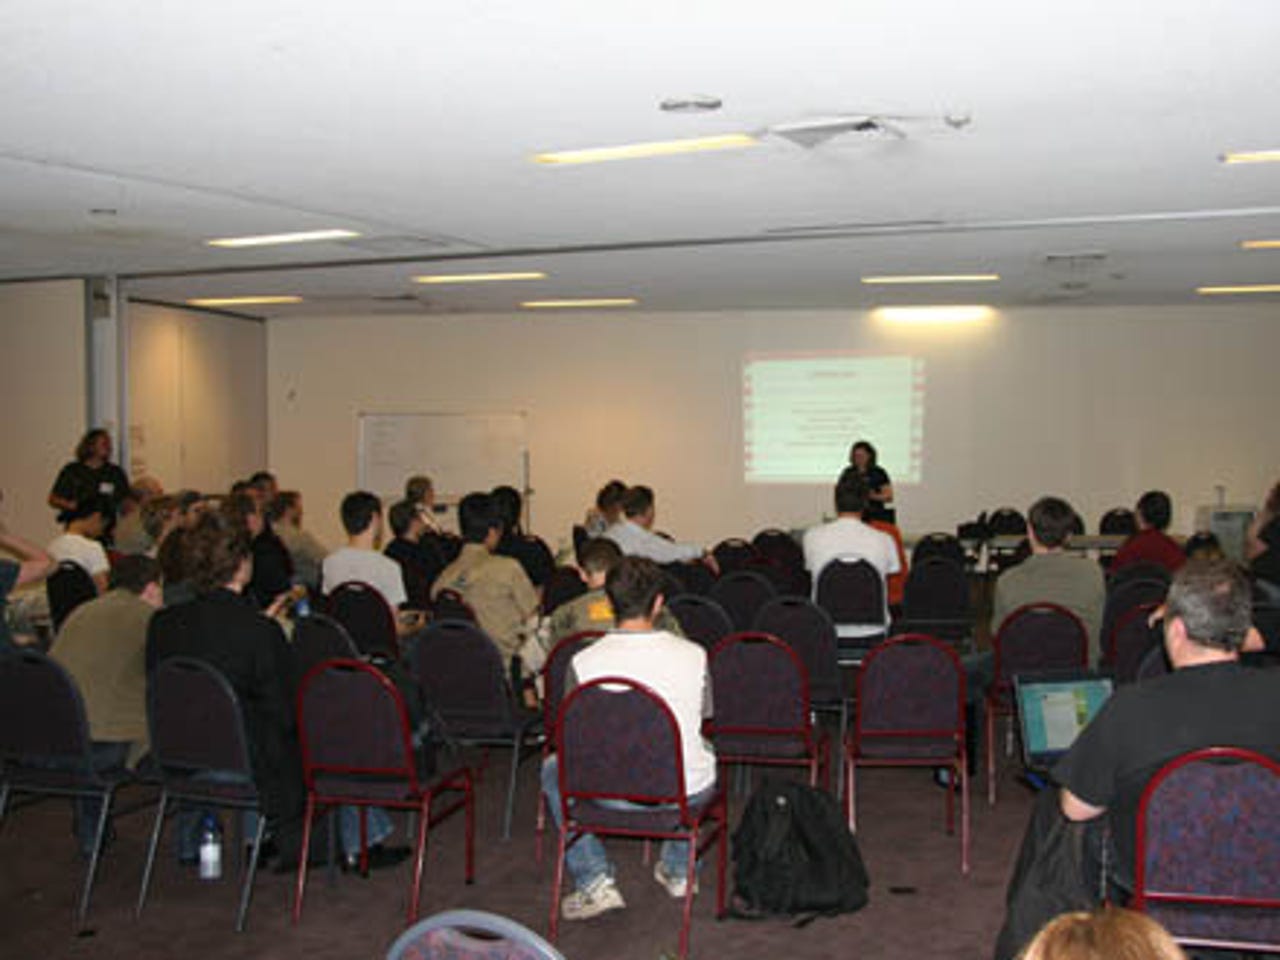 barcamp-sydney-4-photos11.jpg